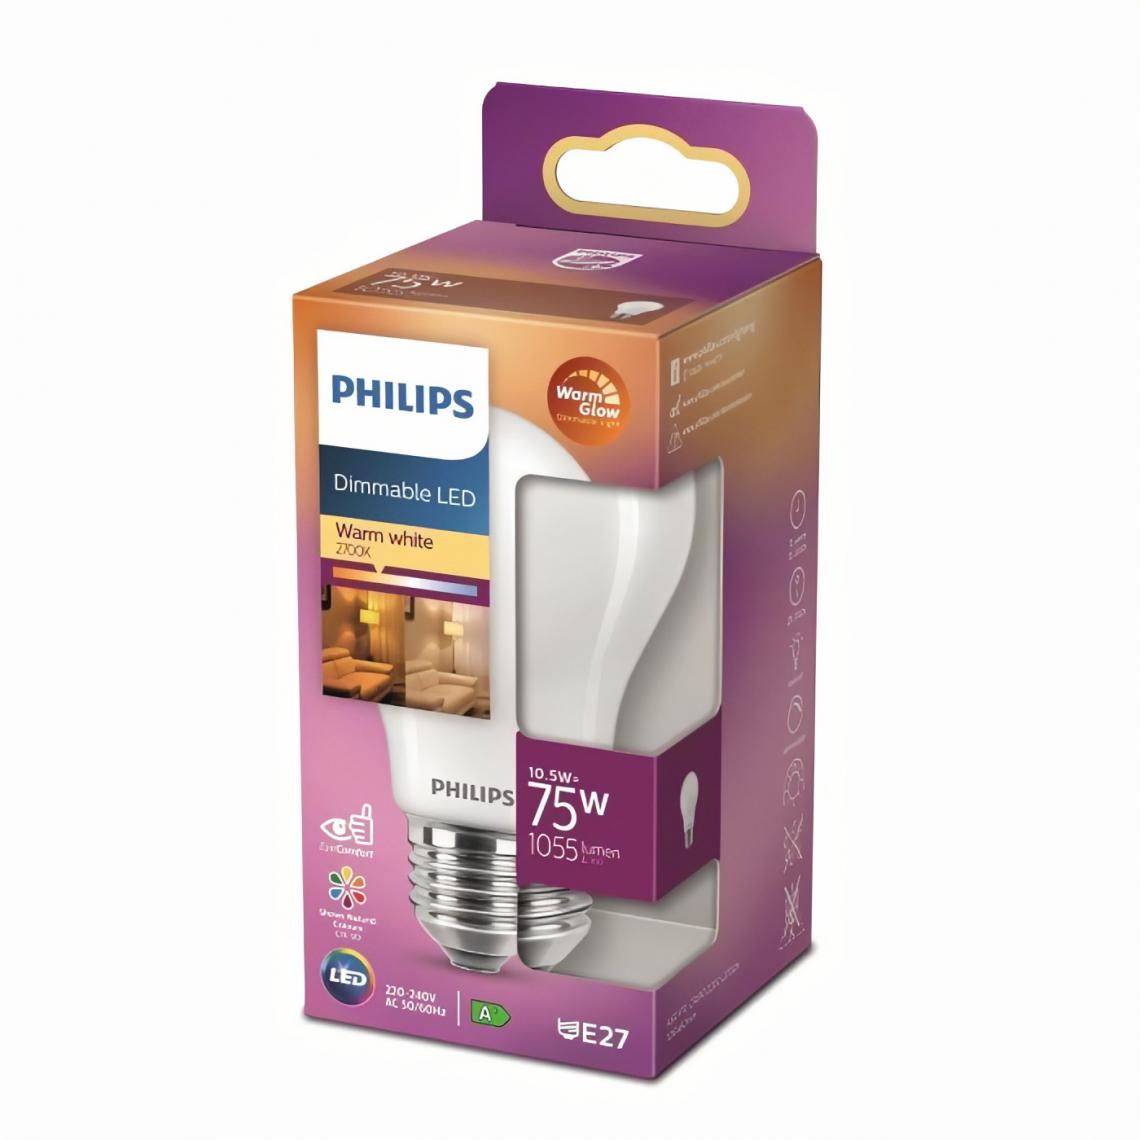 Philips - Philips ampoule LED Equivalent 75W E27, Blanc chaud, Dimmable, verre - Ampoules LED